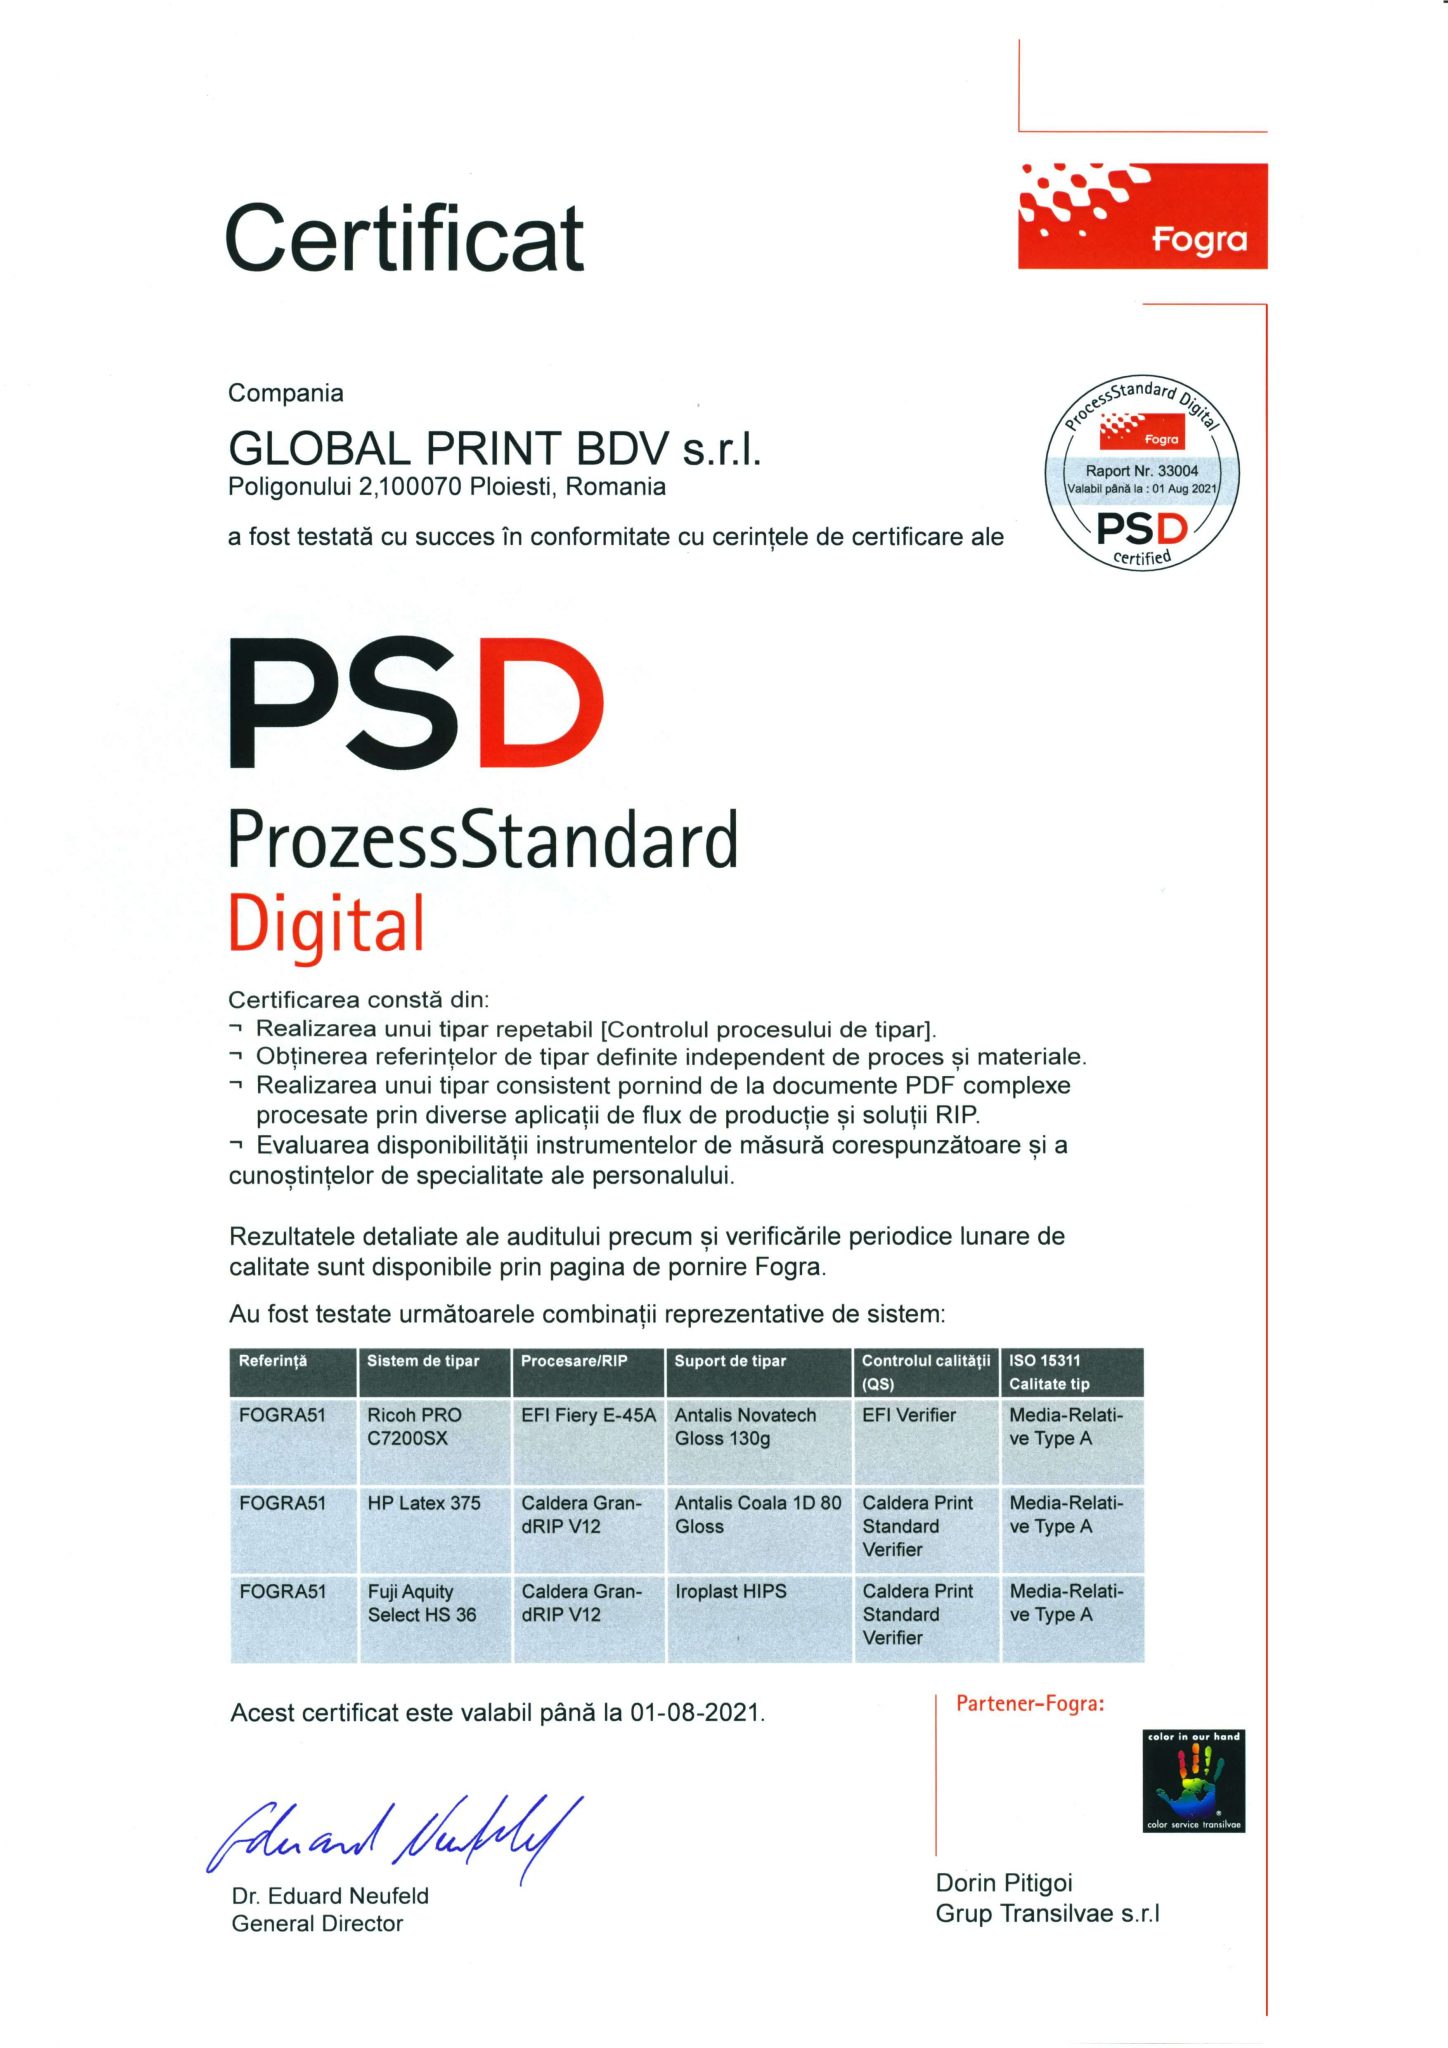 Fogra printing certification